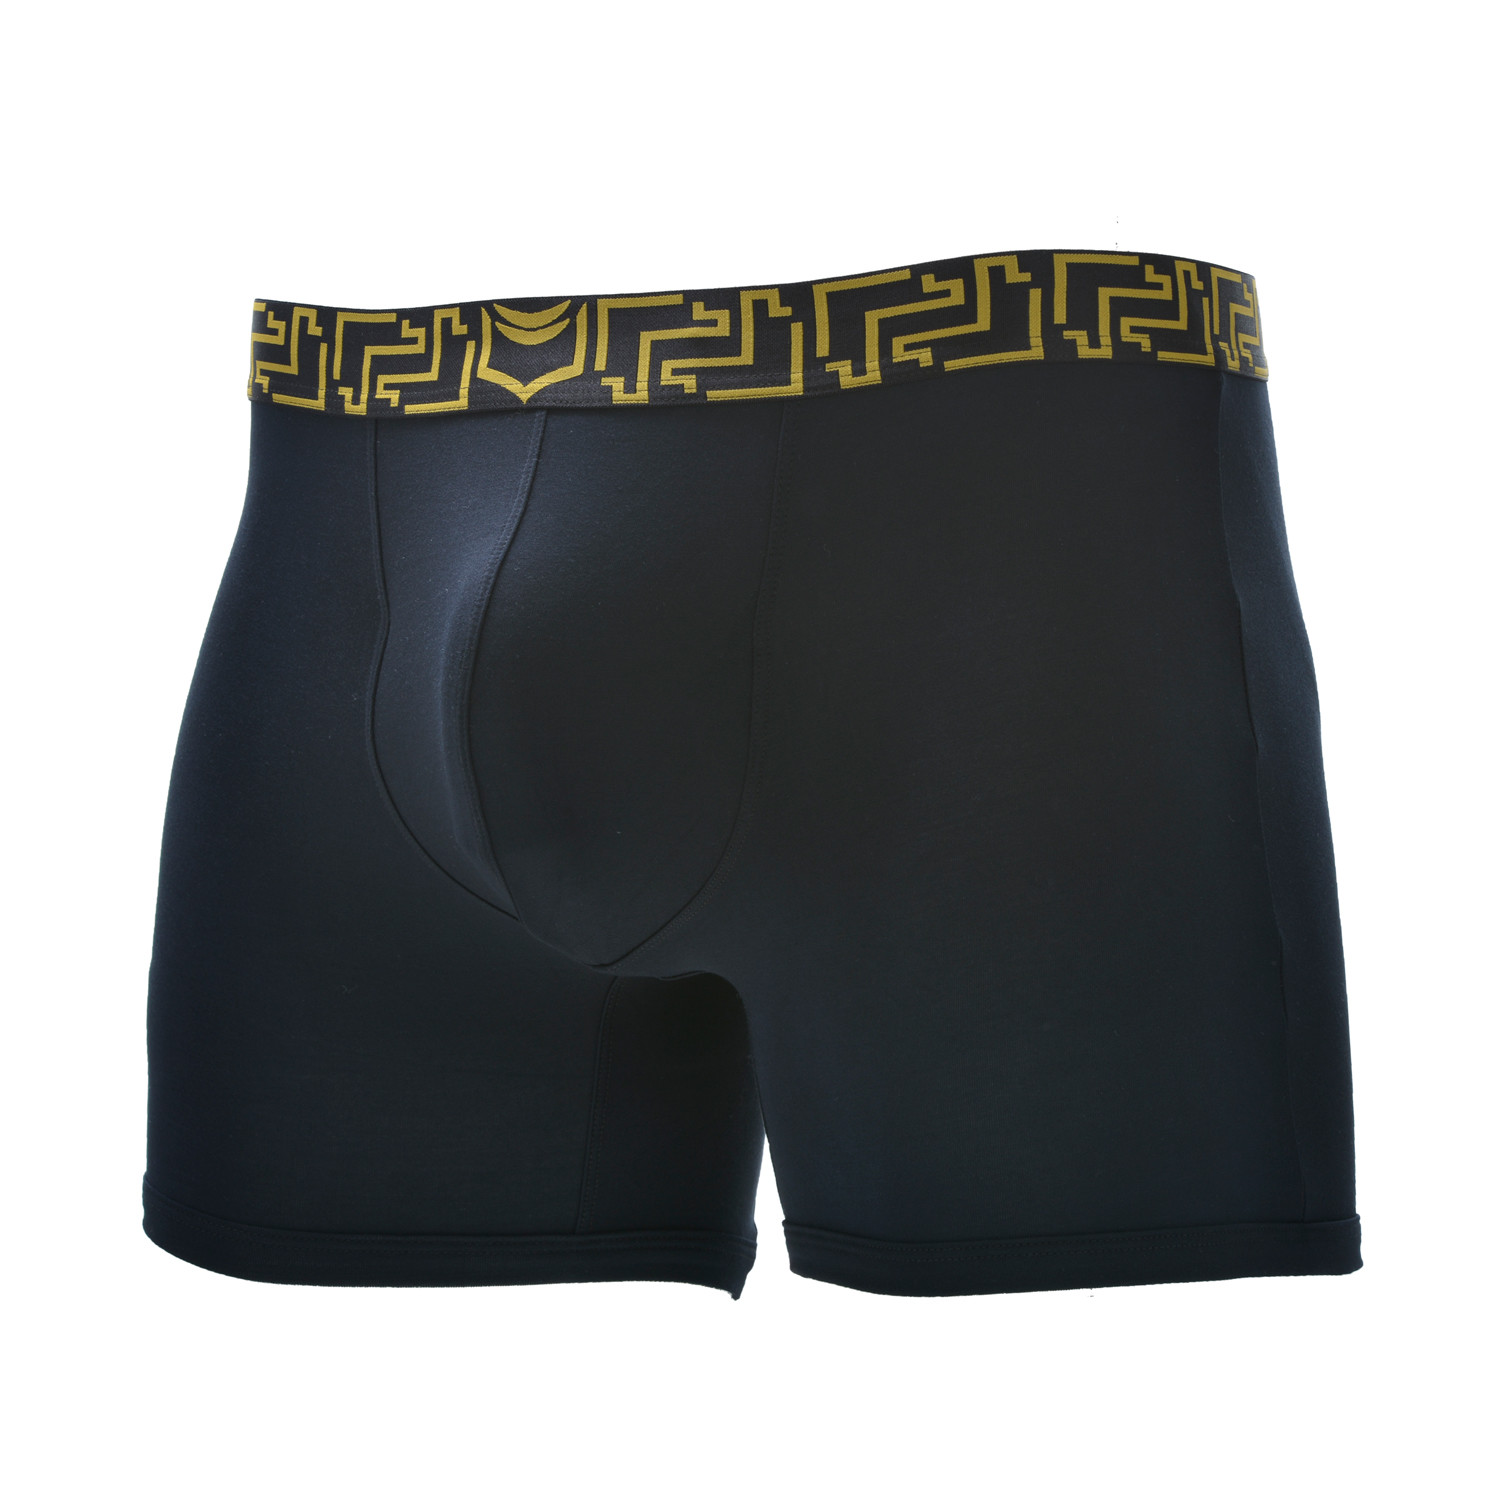 Sheath 3.0 // Black + Gold (Large) - Sheath Underwear - Touch of Modern